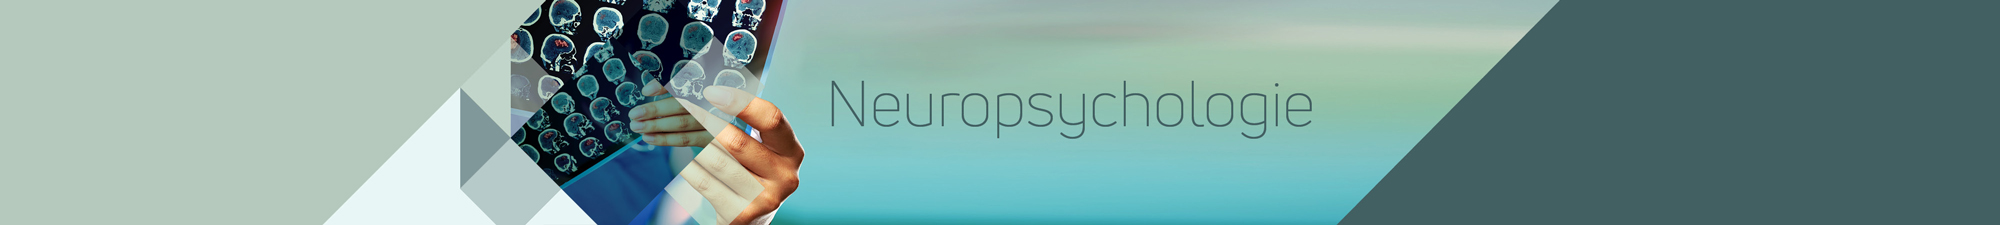 Neuropsychologie Themapagina